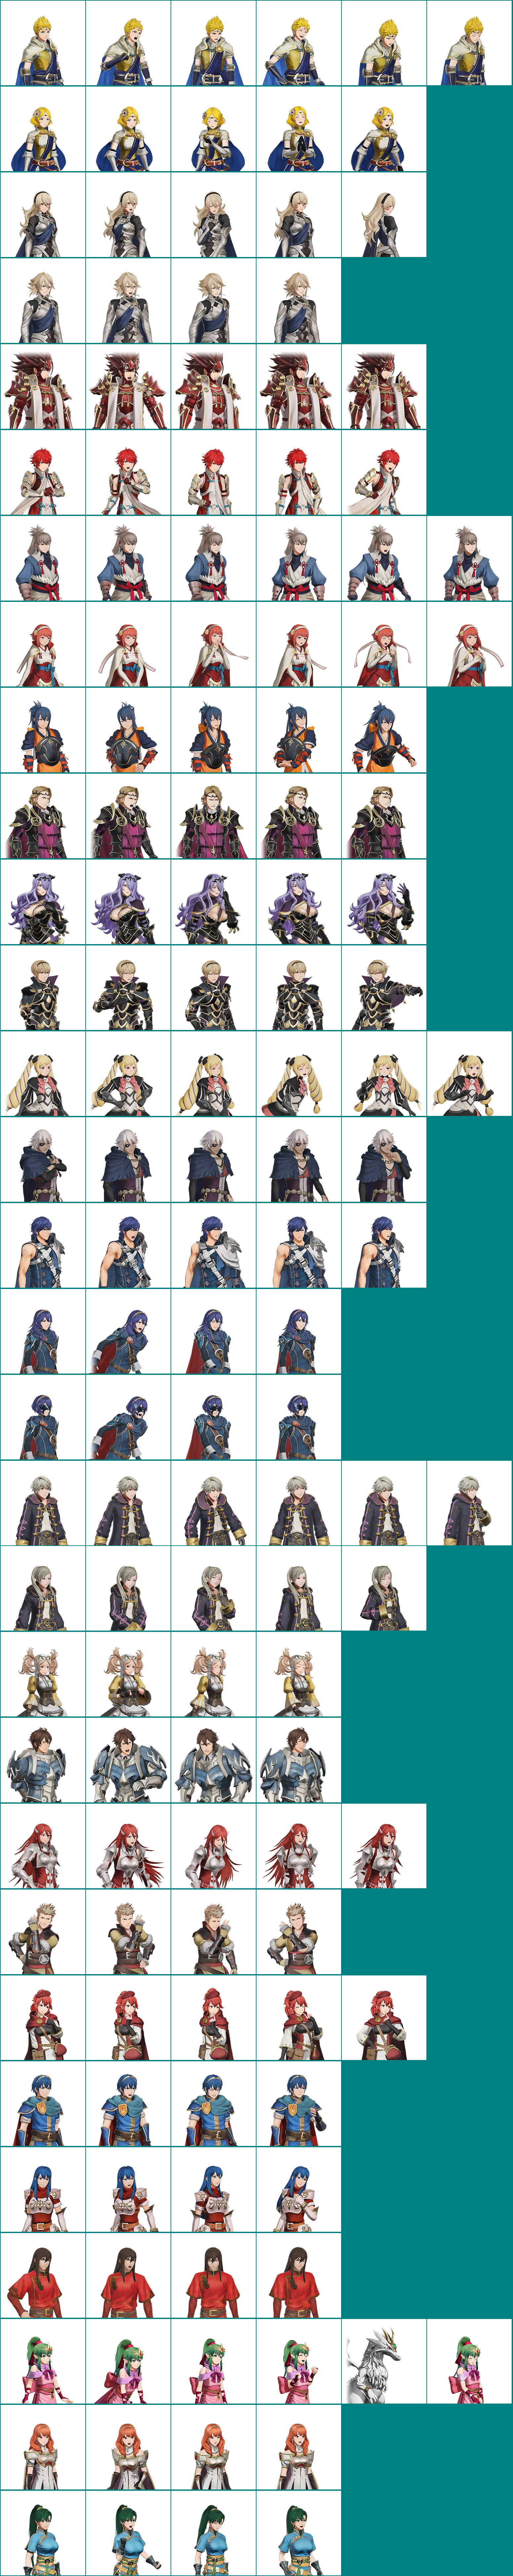 Fire Emblem Warriors - Portraits (Playable Characters)